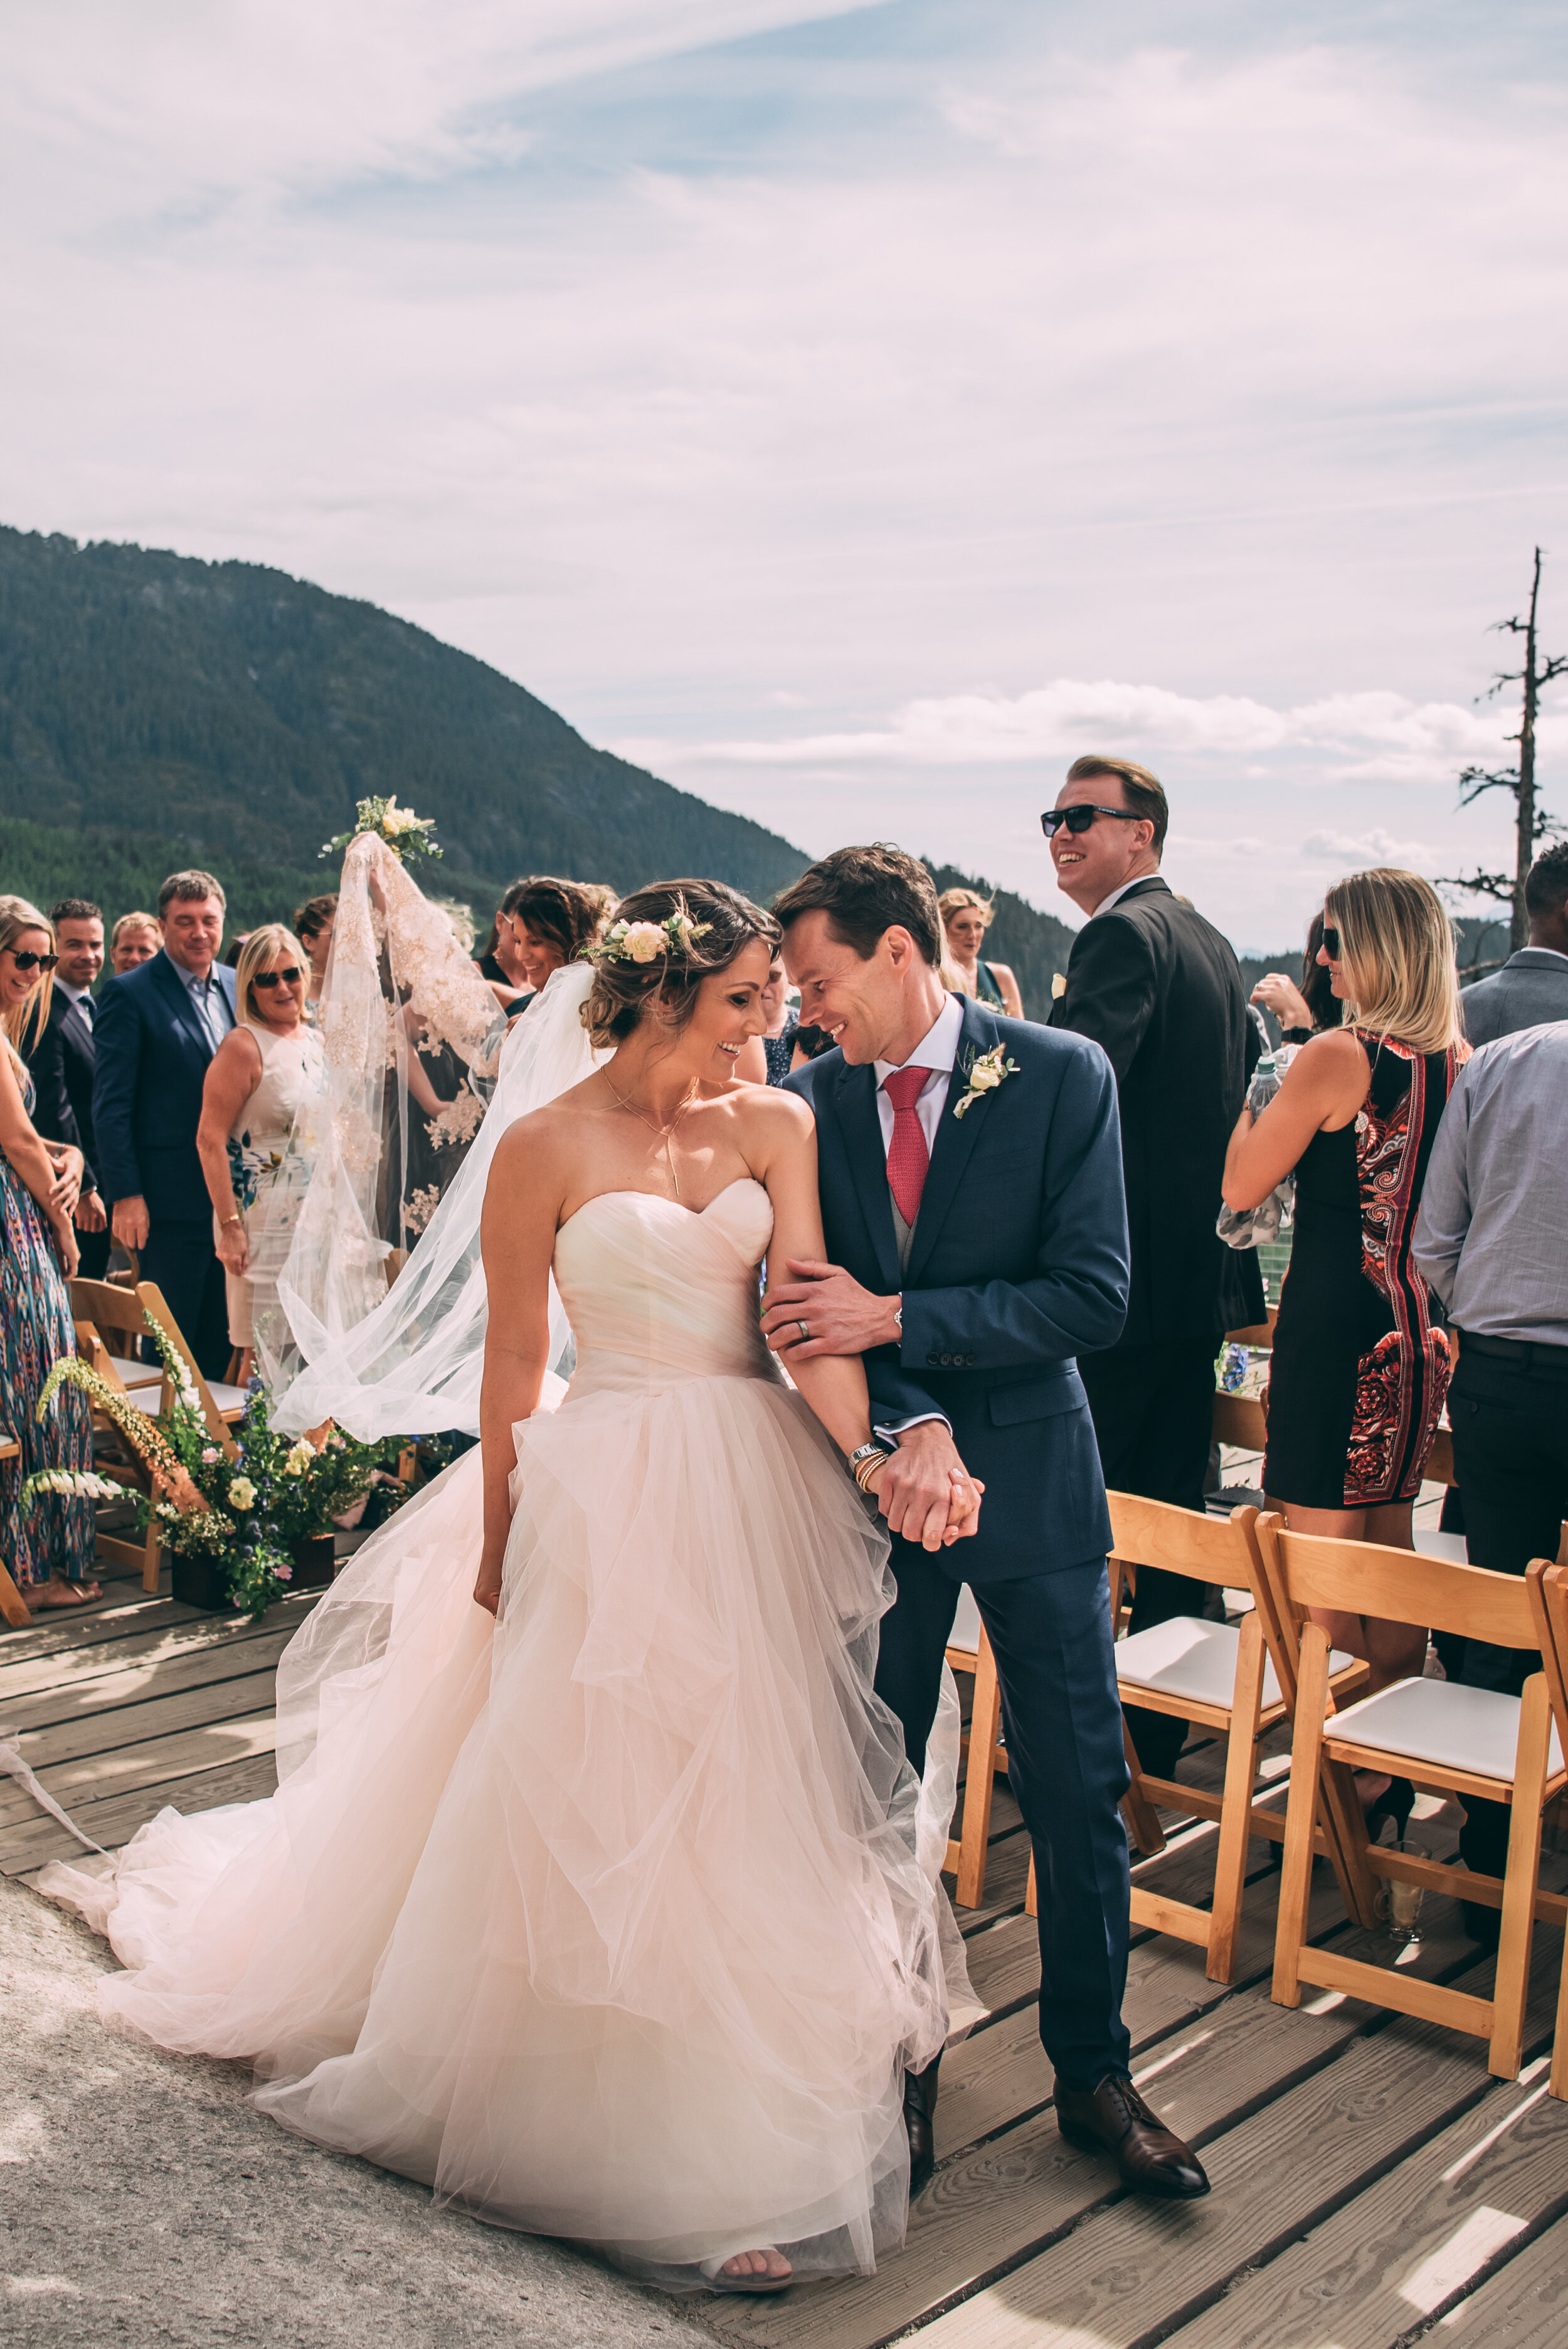 Hayley & Jon Sea to Sky Gondola Wedding - June 17, 2019 - Laura Olson Photography - Sea to Sky Wedding Photographer-2822.jpg